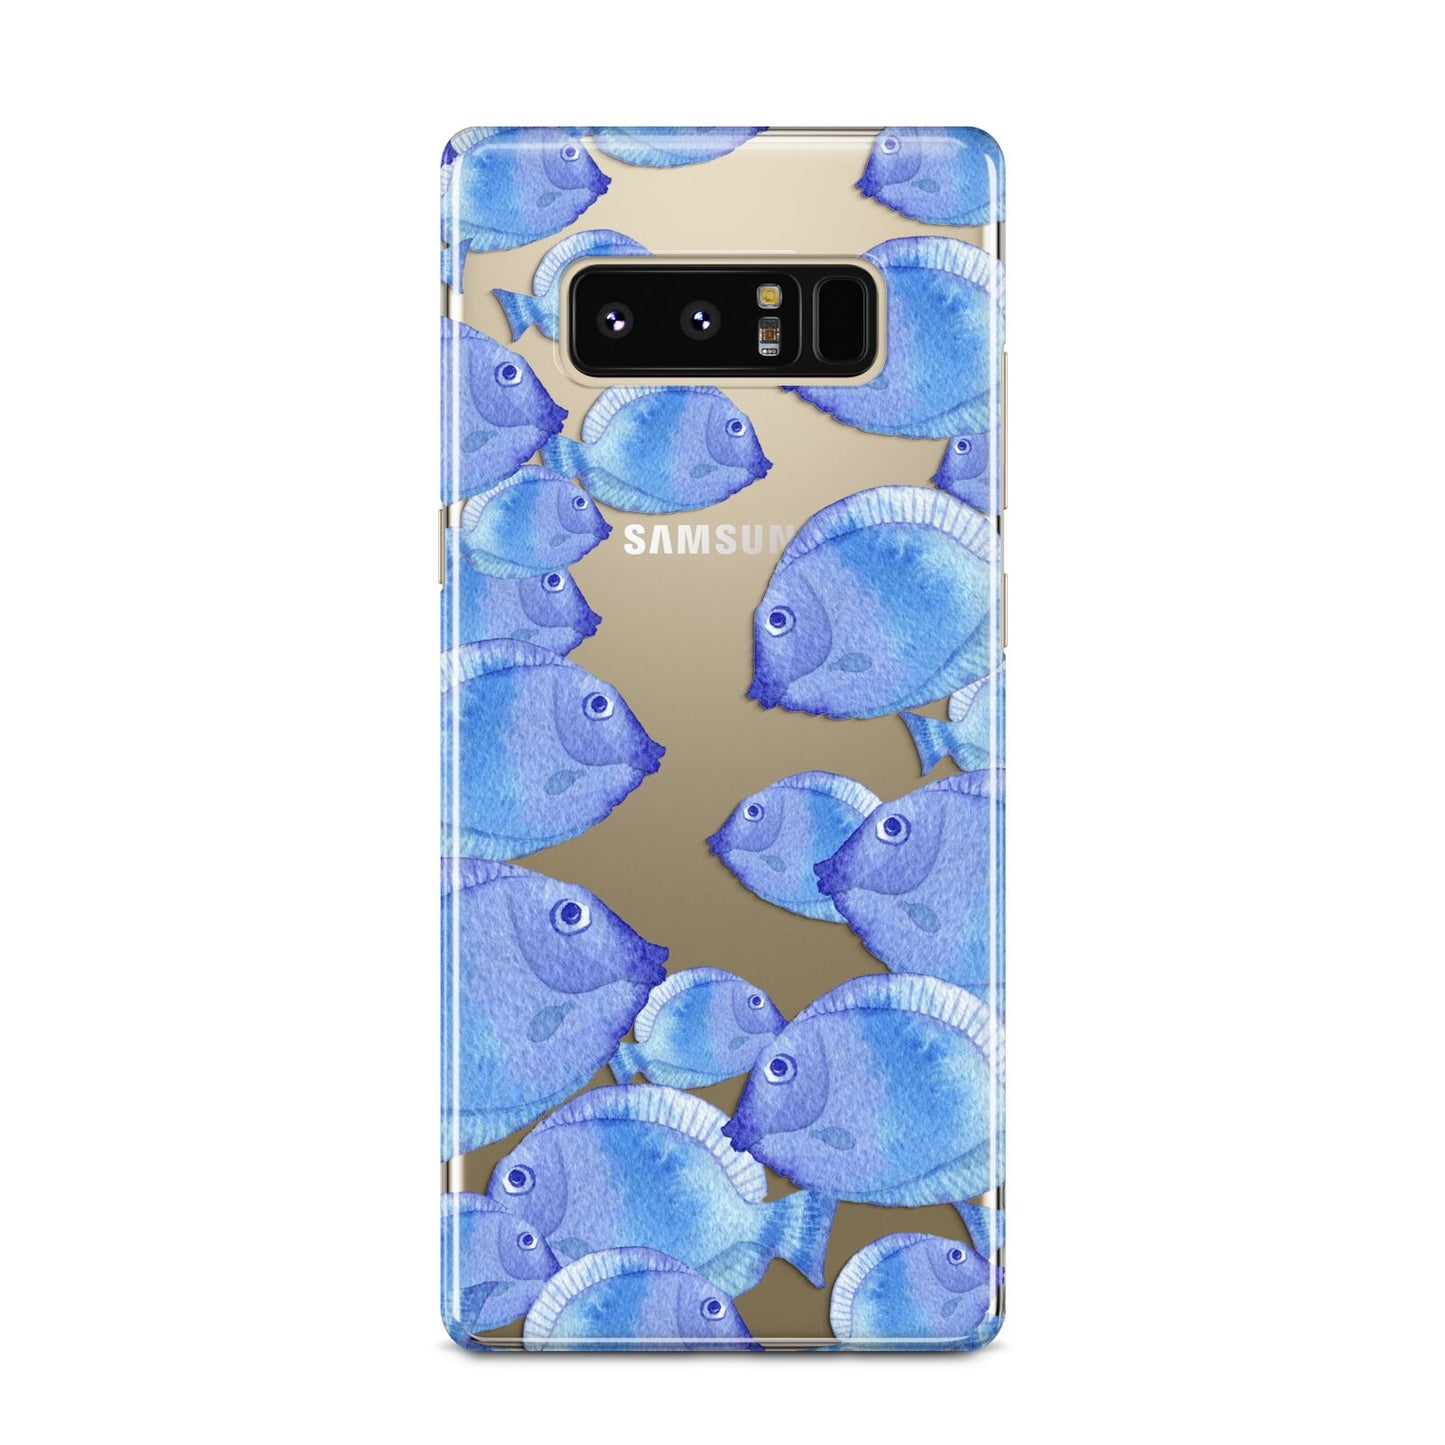 Fish Samsung Galaxy Note 8 Case